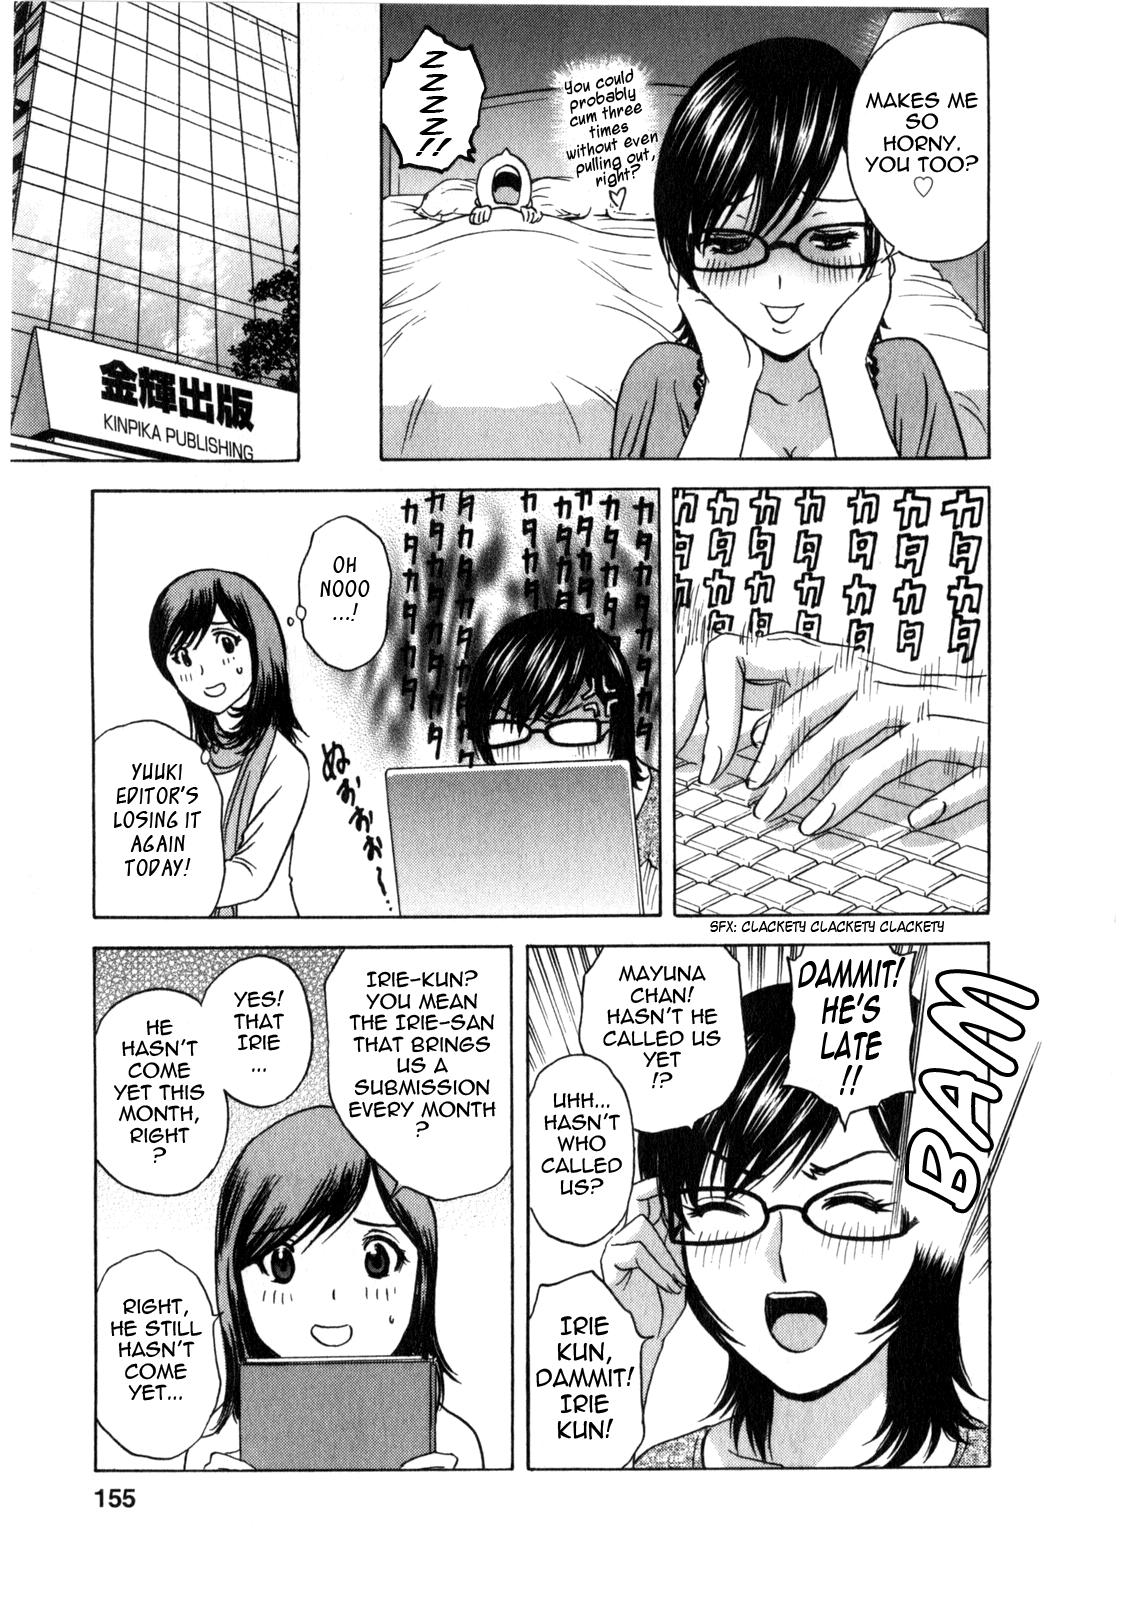 [Hidemaru] Life with Married Women Just Like a Manga 1 - Ch. 1-9 [English] {Tadanohito} 163